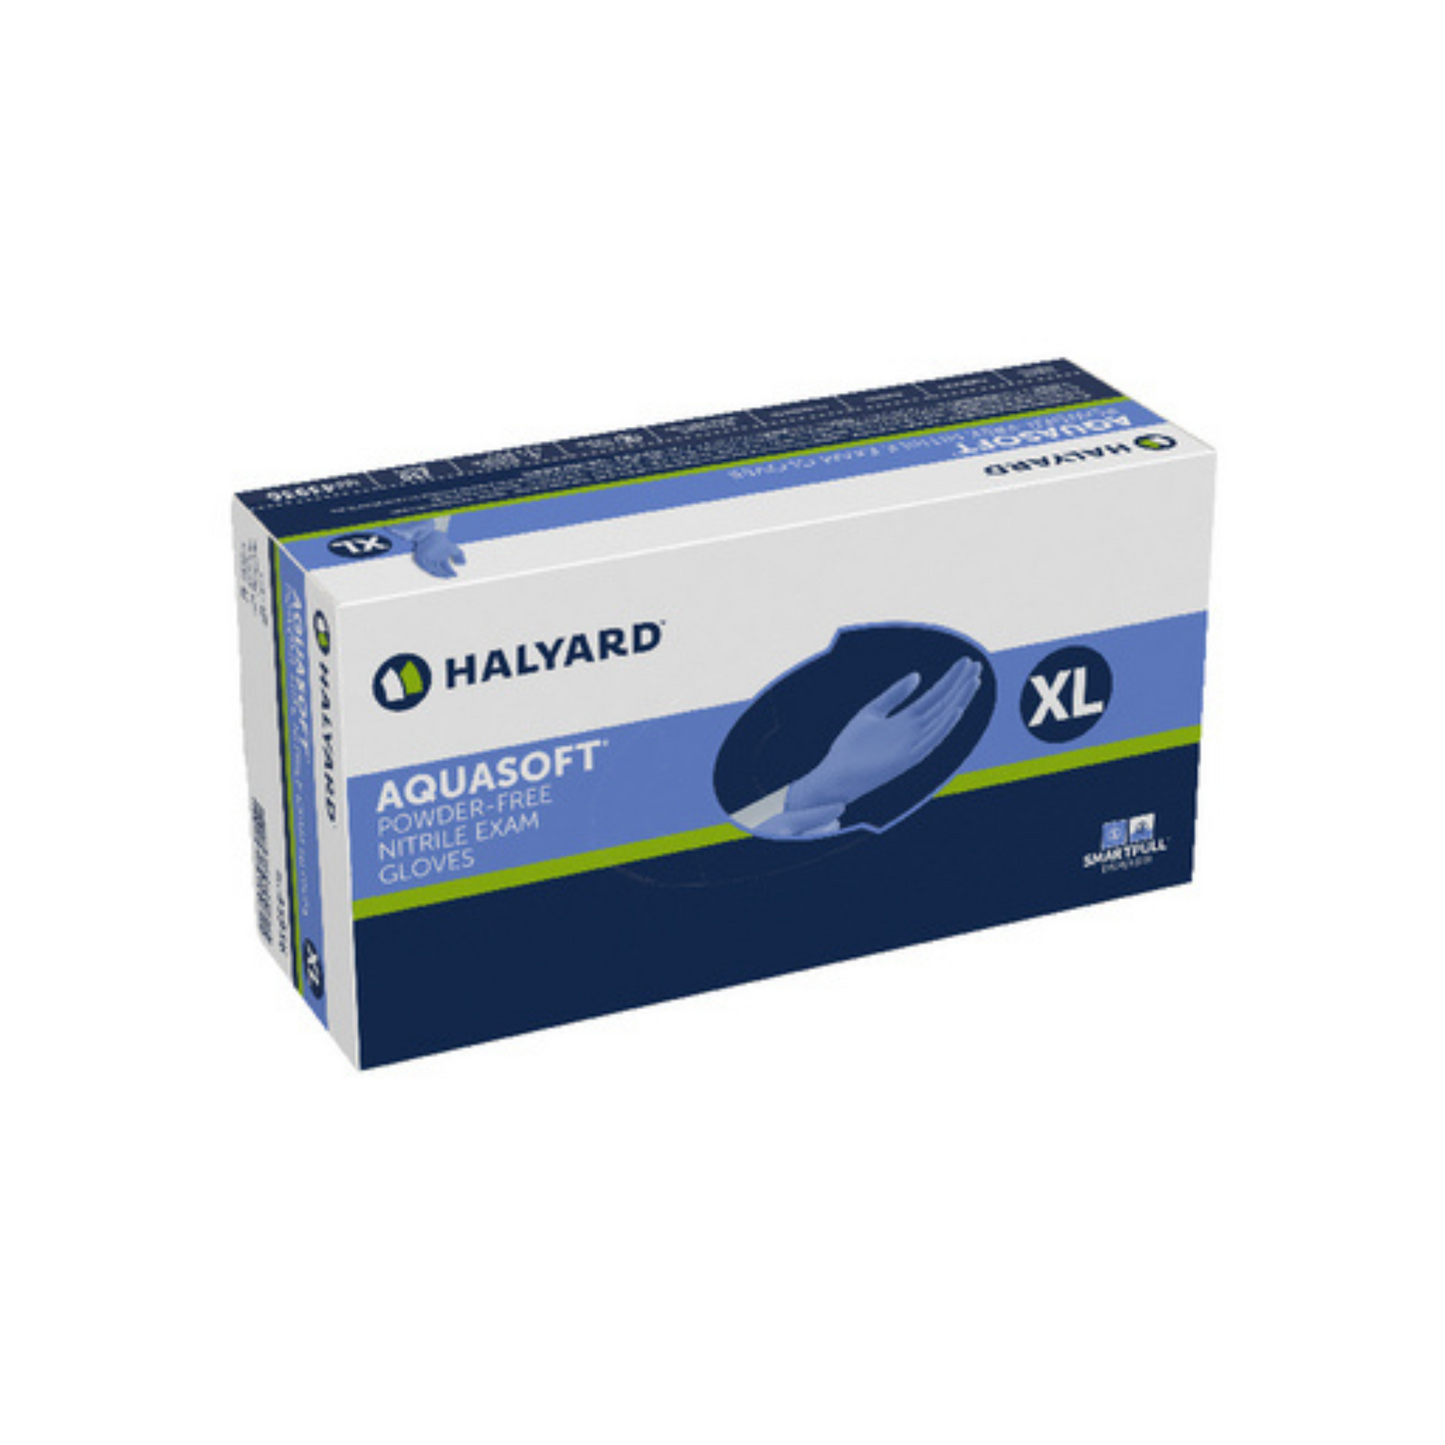 Halyard Aquasoft Nitrile Exam Gloves XL - Box (250pc)